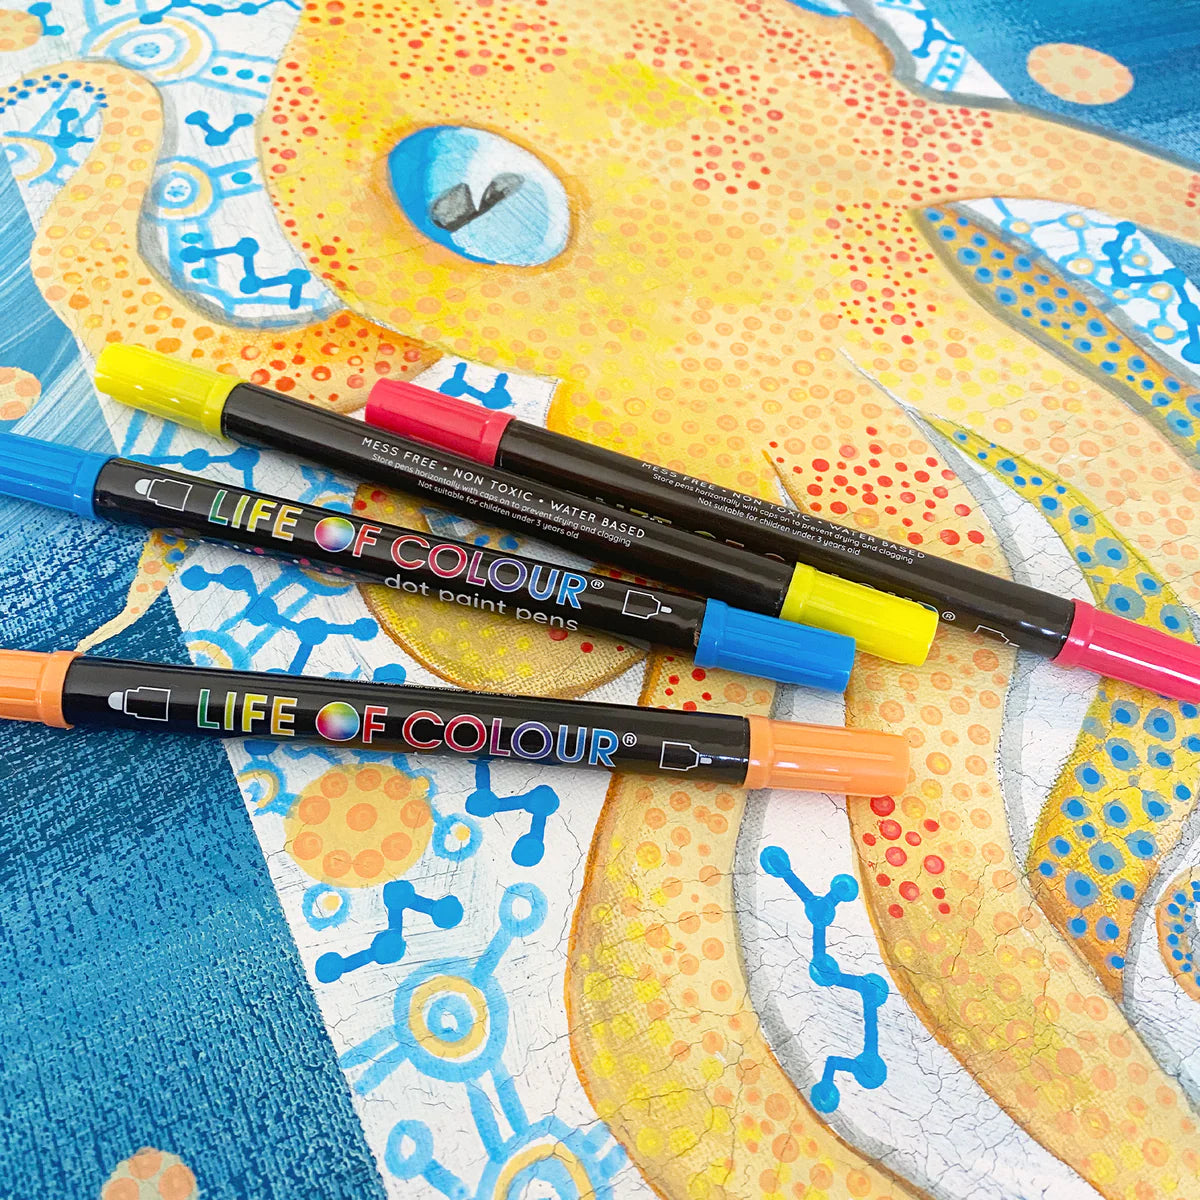 Essential Colours Brush Tip Acrylic Paint Pens - Set of 16 - Life of Colour